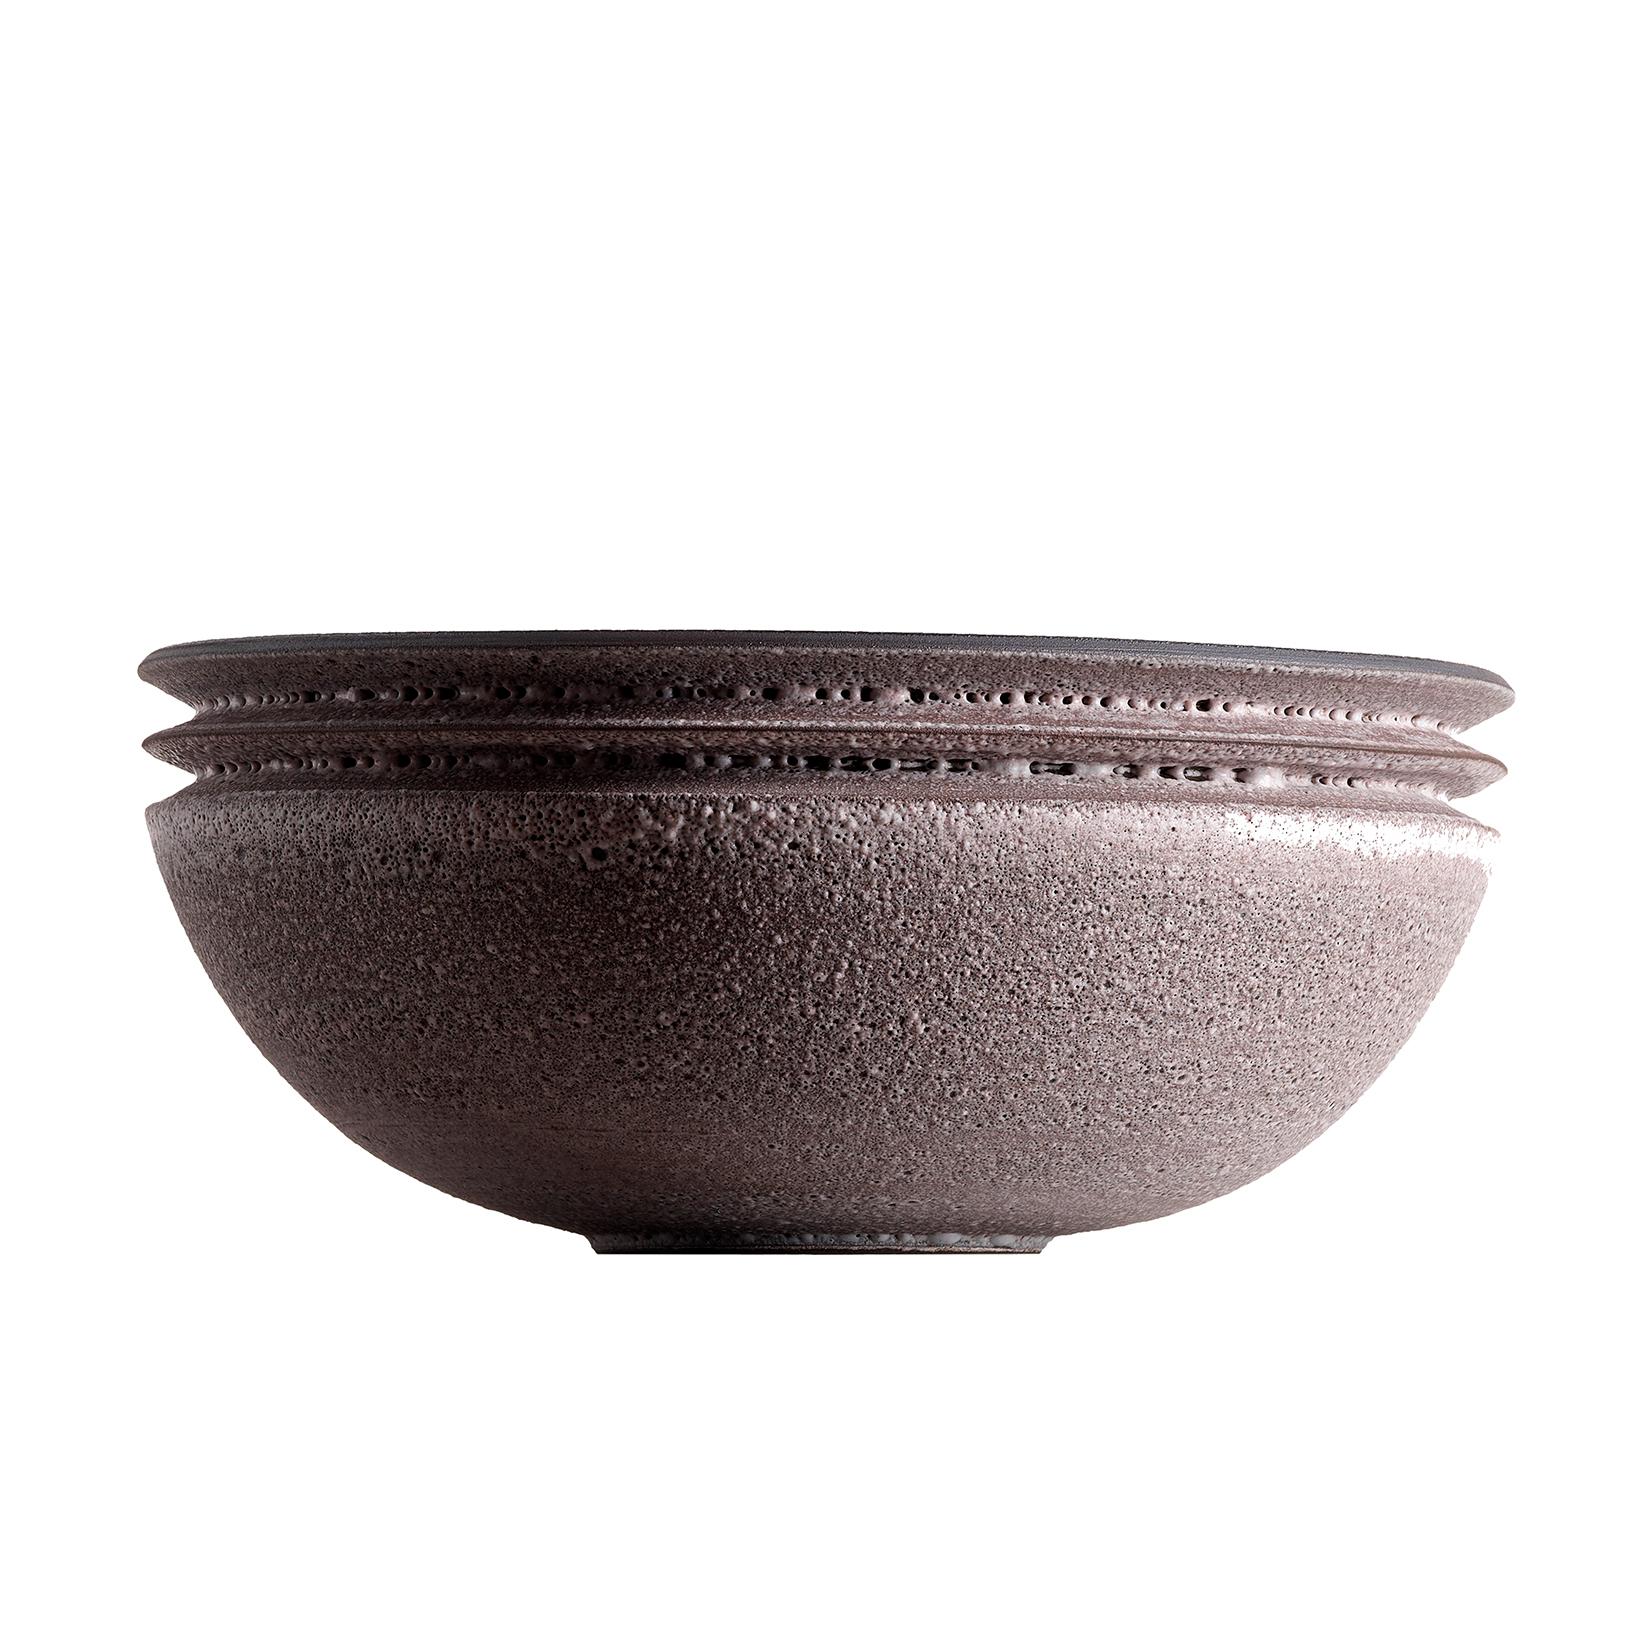 Moss Pink, Vessel N, 9 inch Bowl, Slip Cast Ceramic, N/O Vessels Collection For Sale